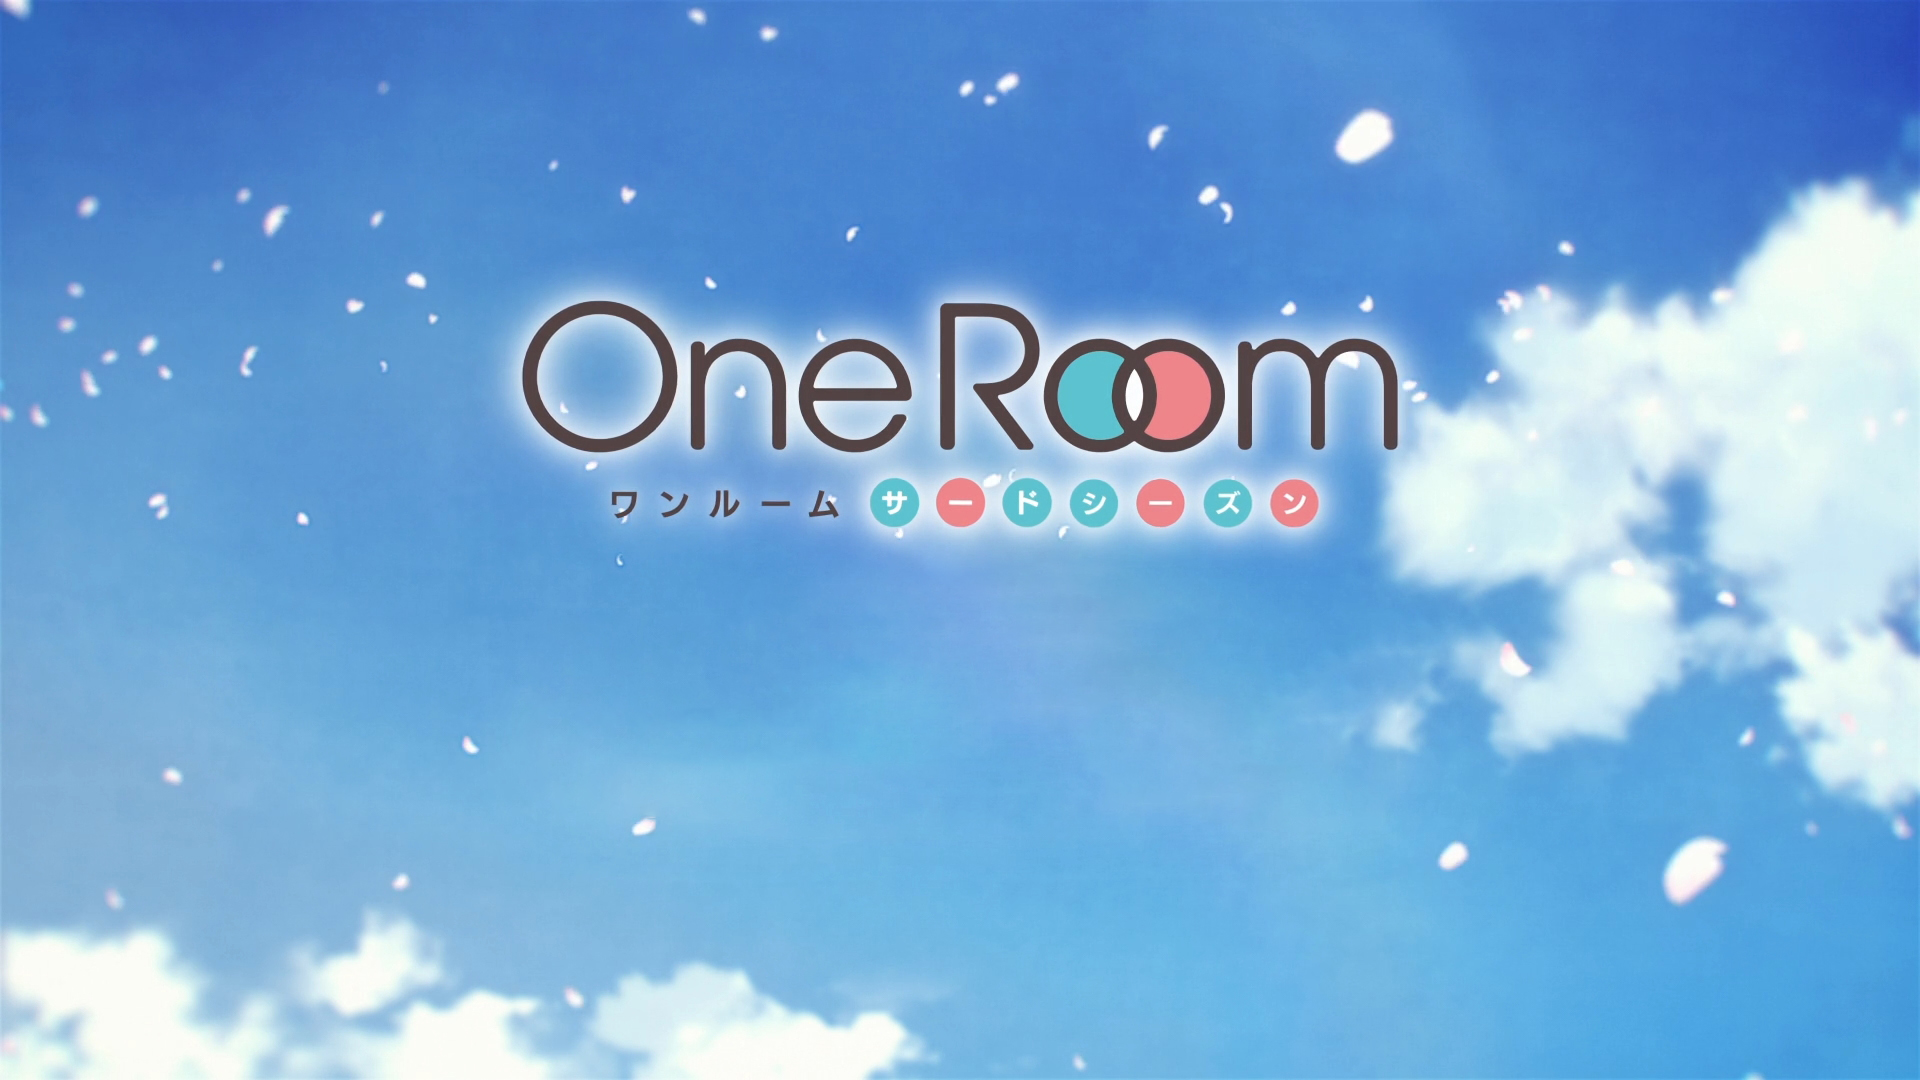 One Room Season 3 BATCH Subtitle Indonesia